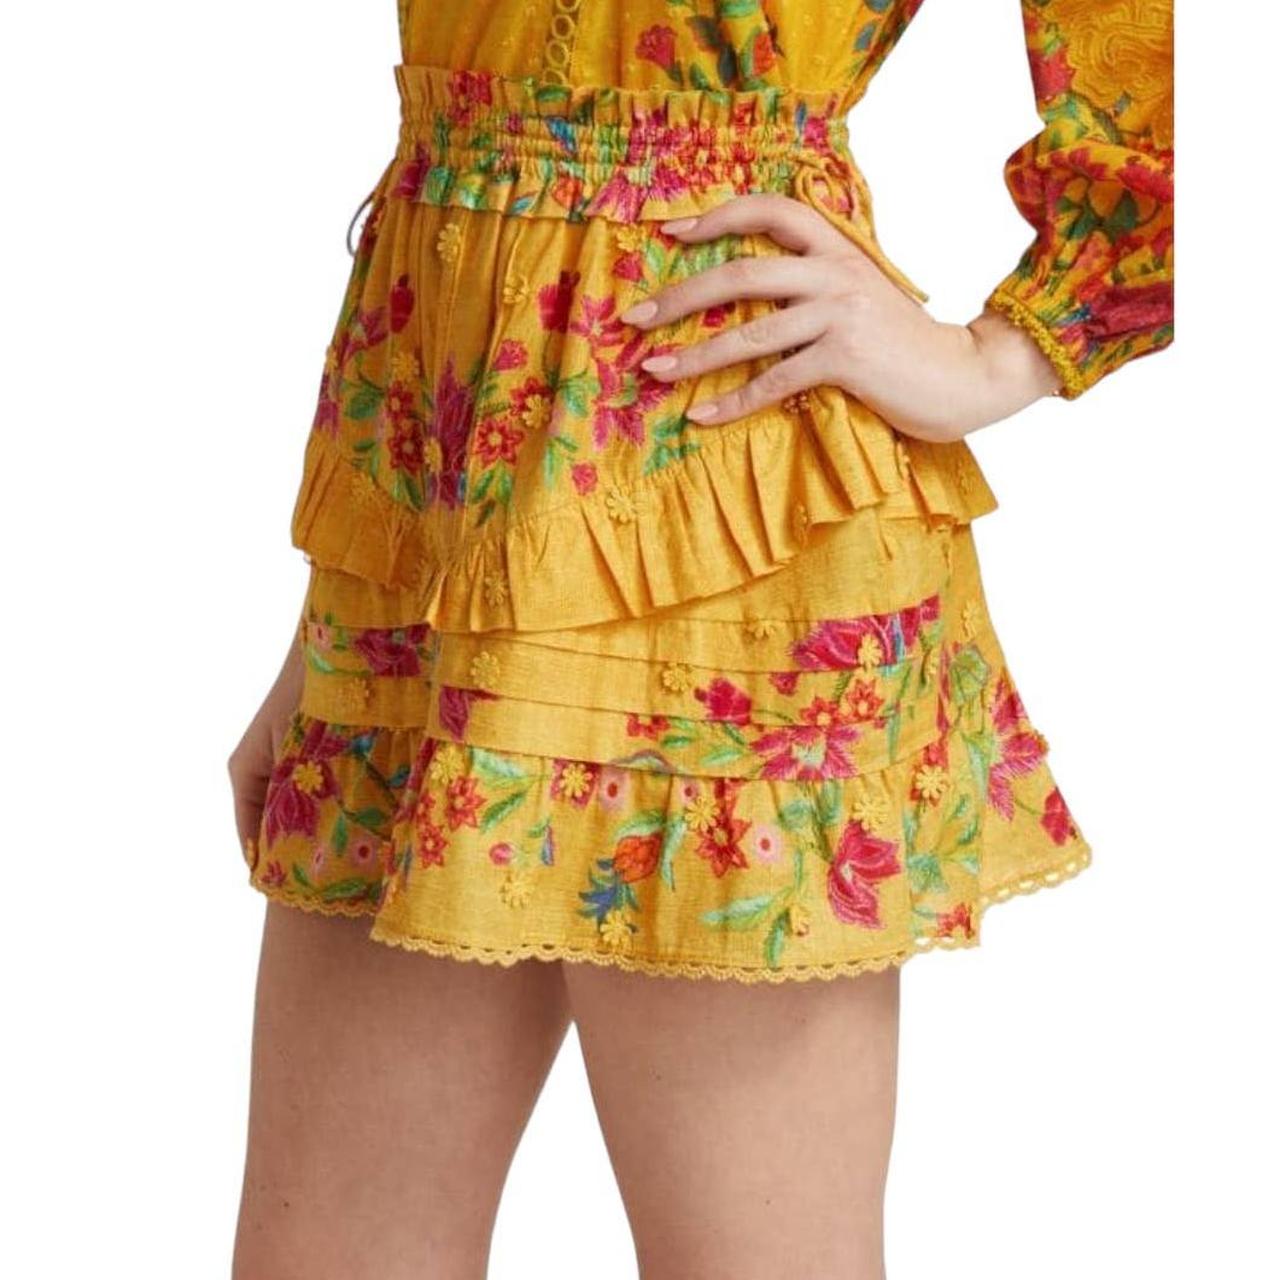 Farm Rio Women's Yellow and Pink Skirt (5)